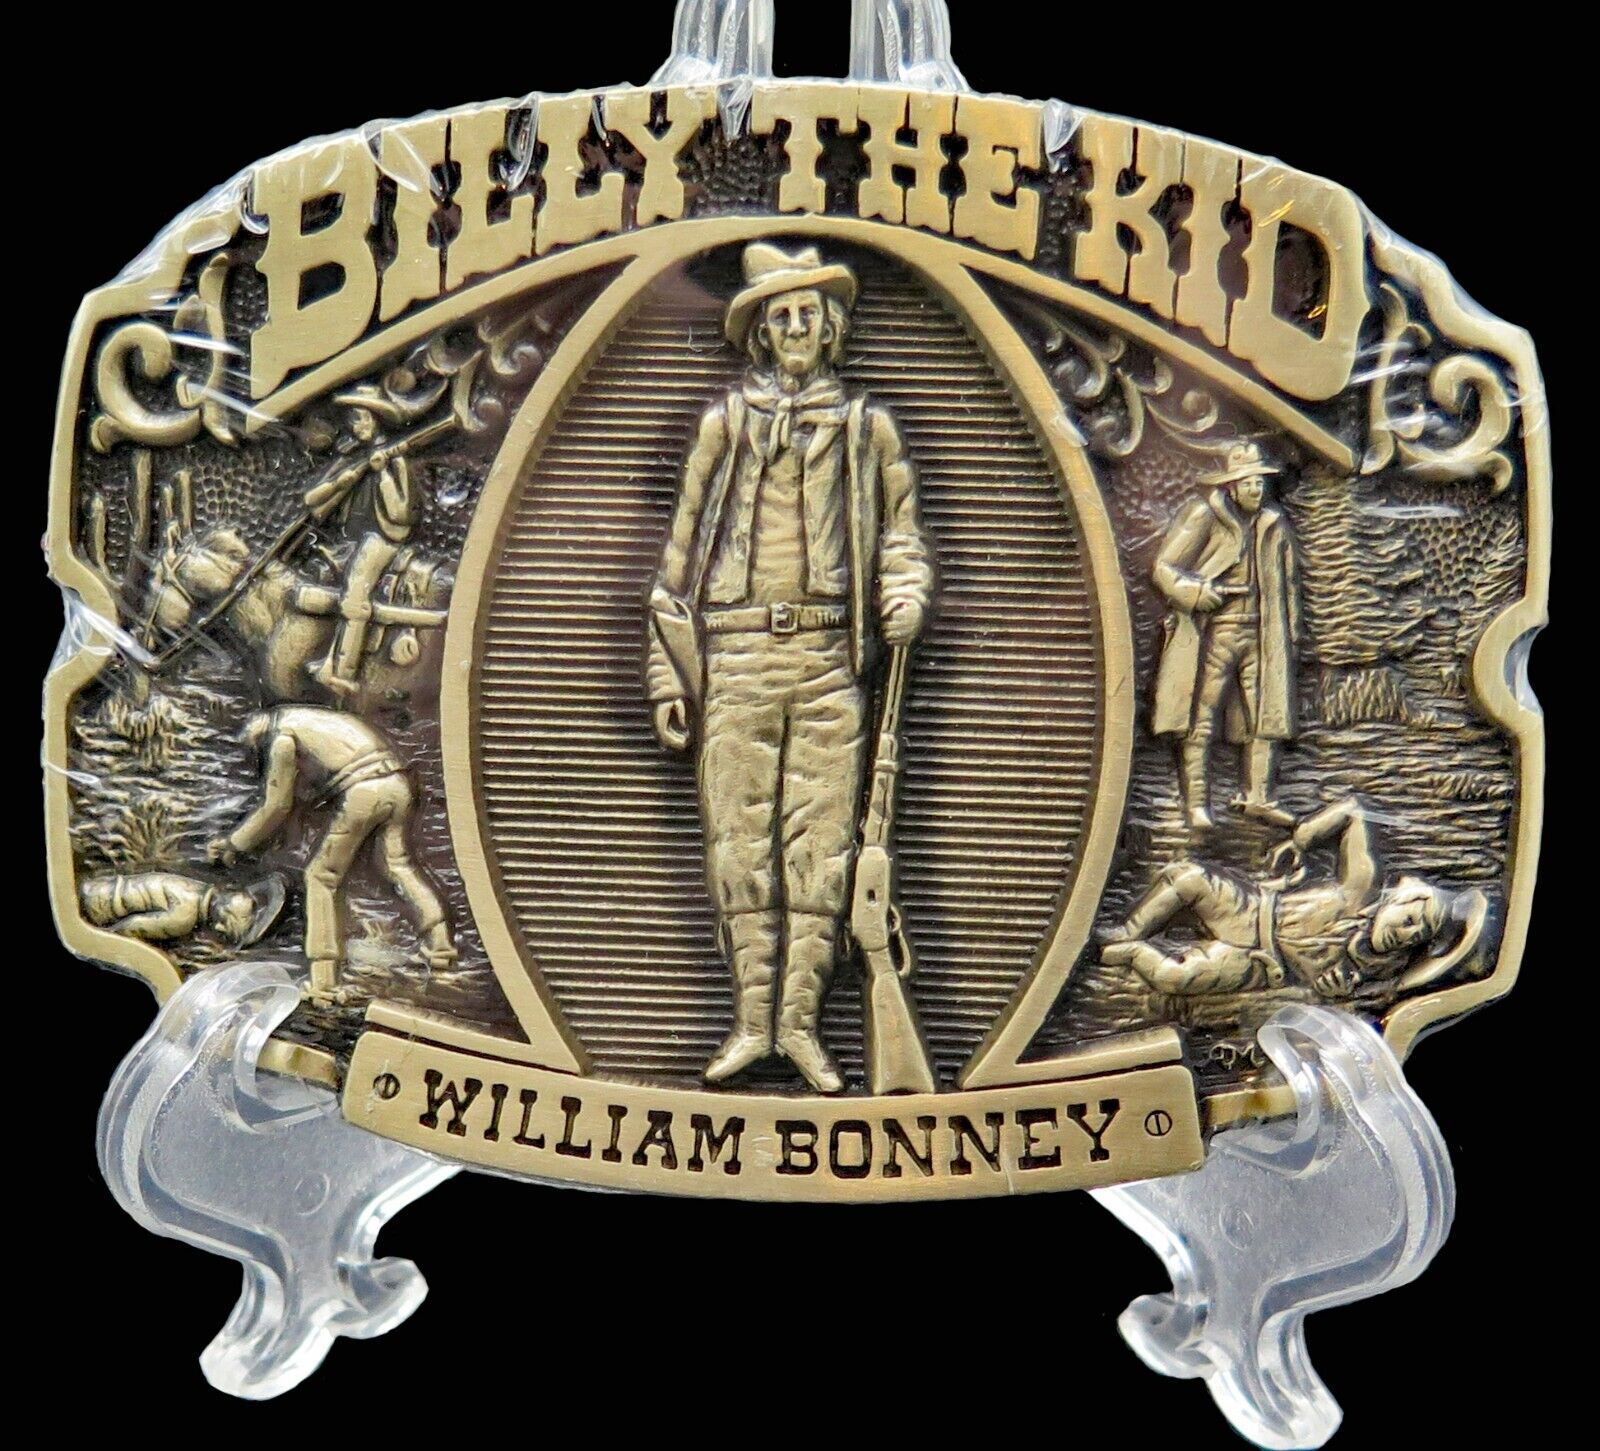 Billy The Kid William Bonney Award Design Medals Brass Vintage Belt Buckle